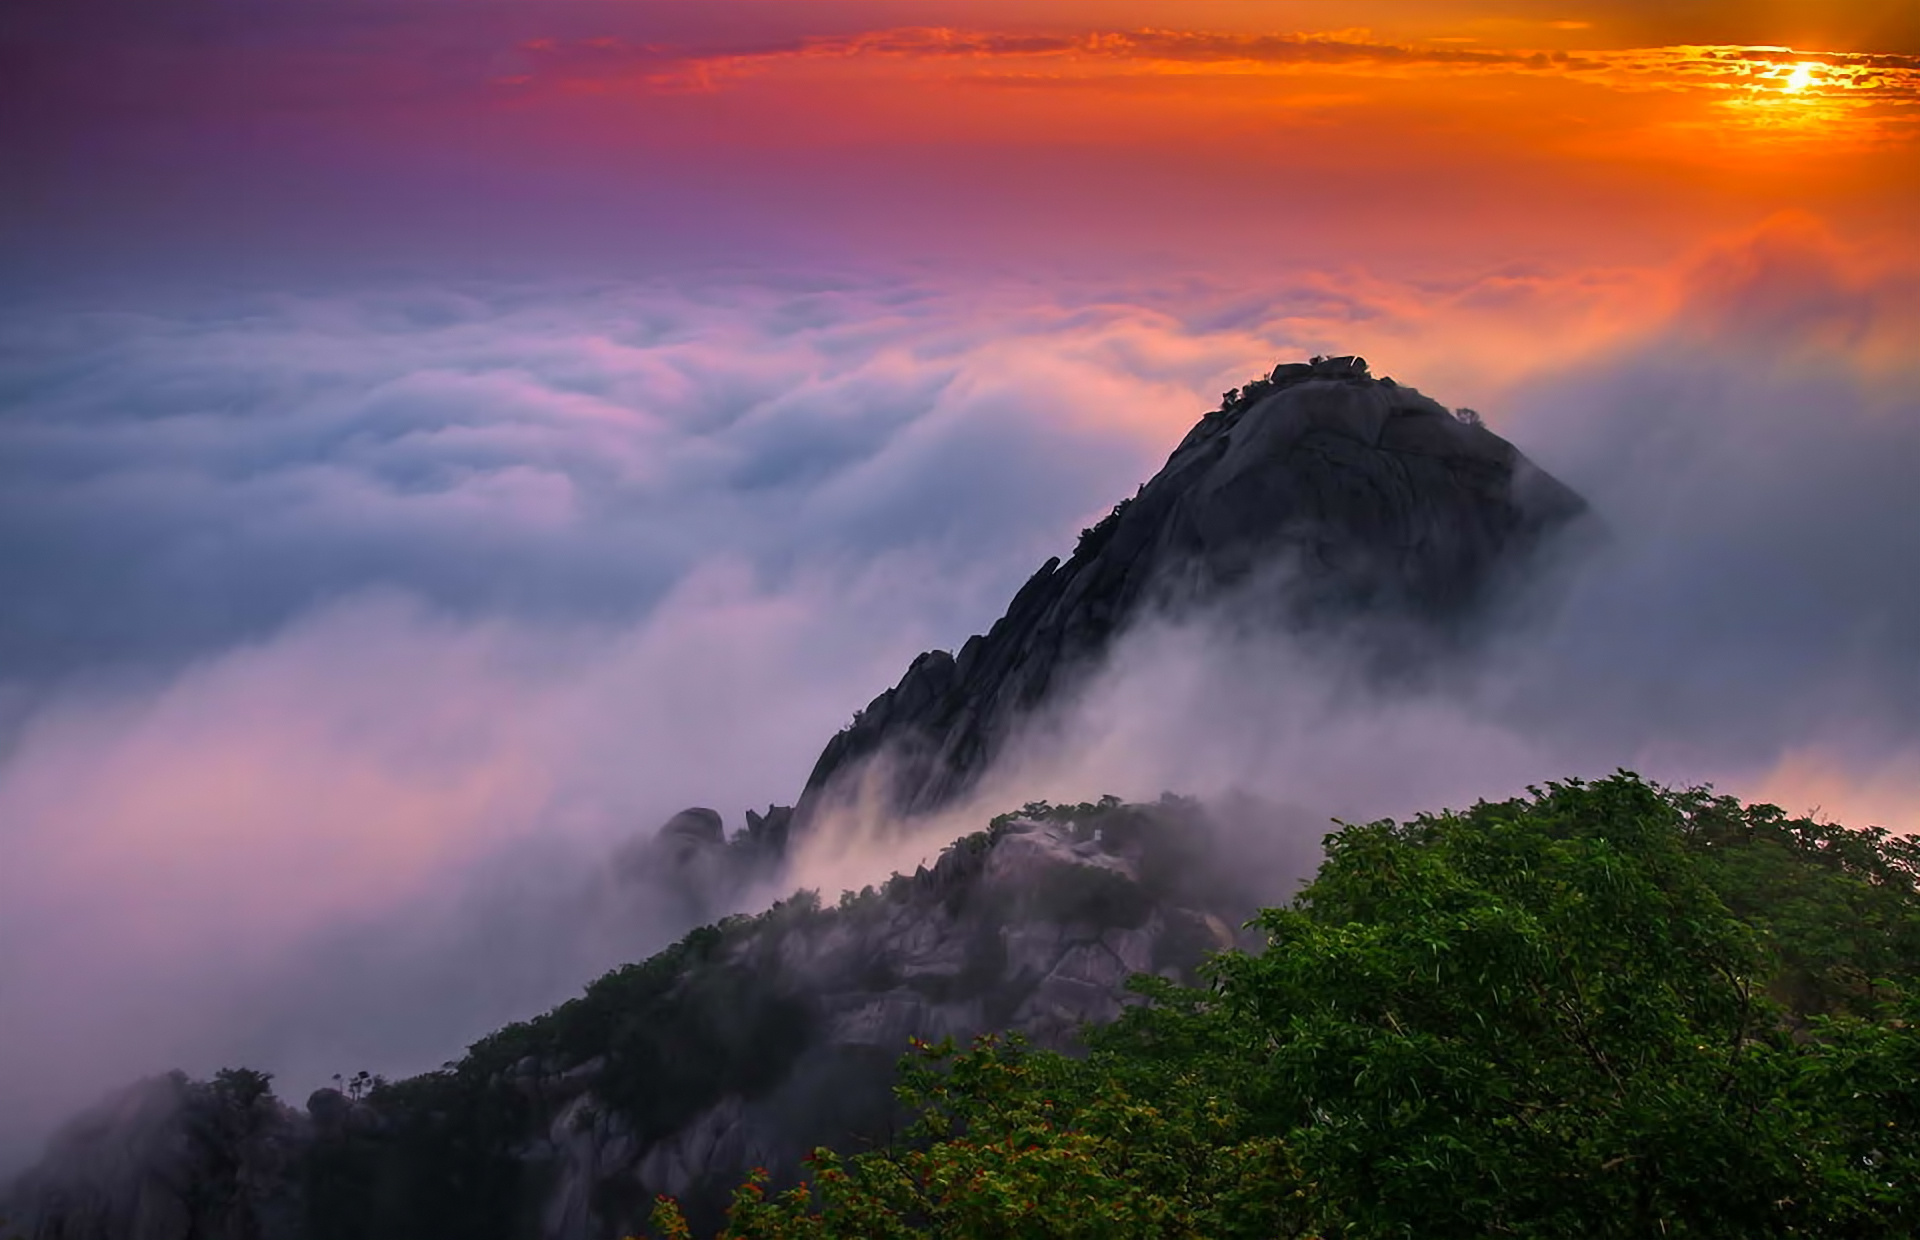 Beauty clouds Korea landscape mountains sunrise